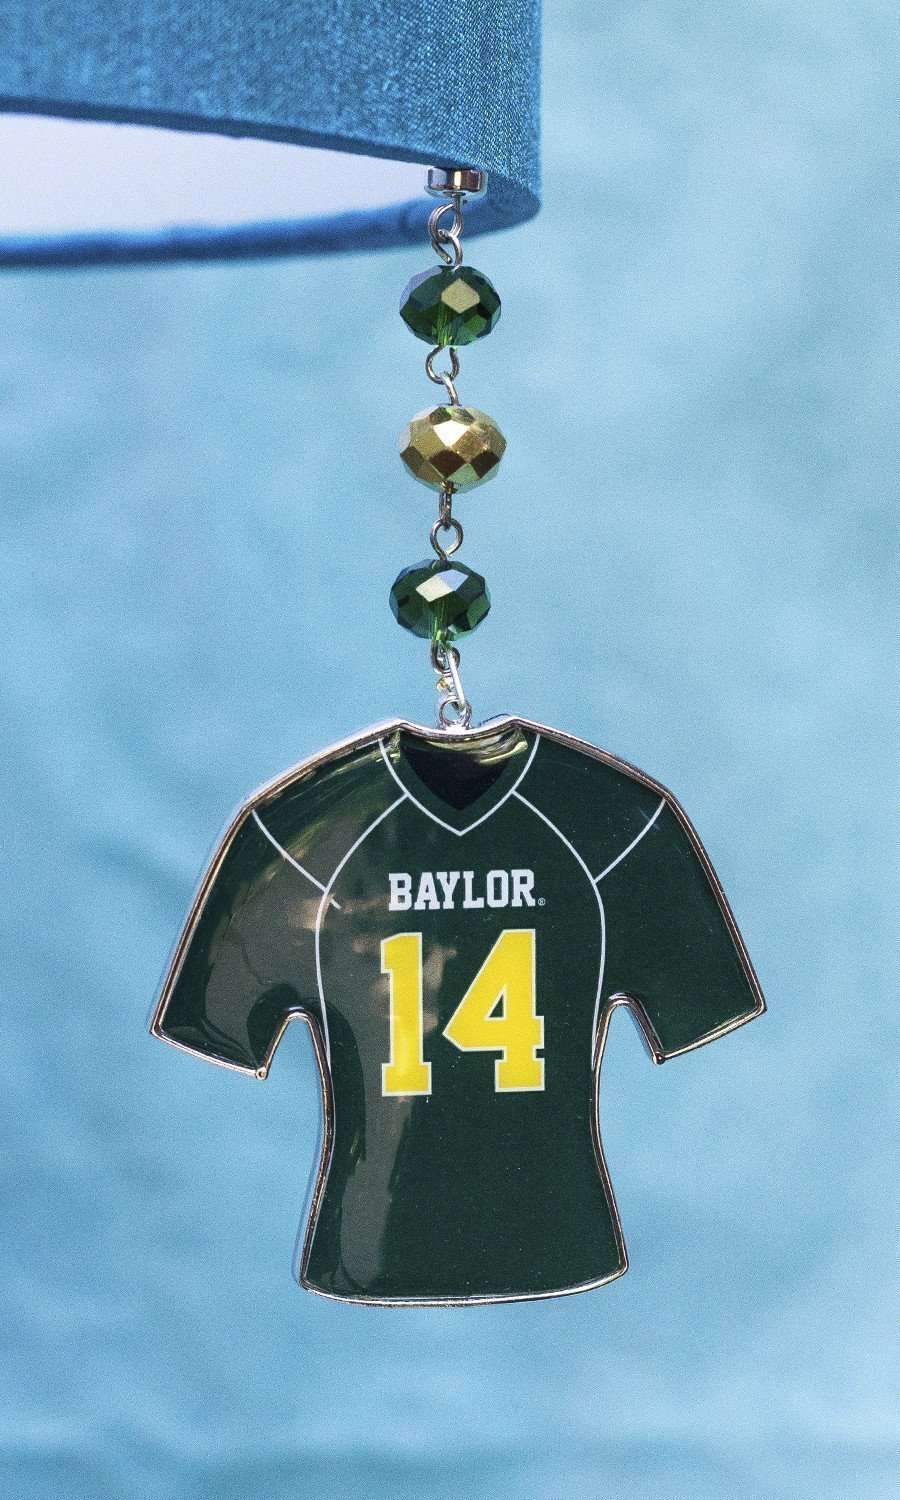 Baylor Bears lacrosse jersey